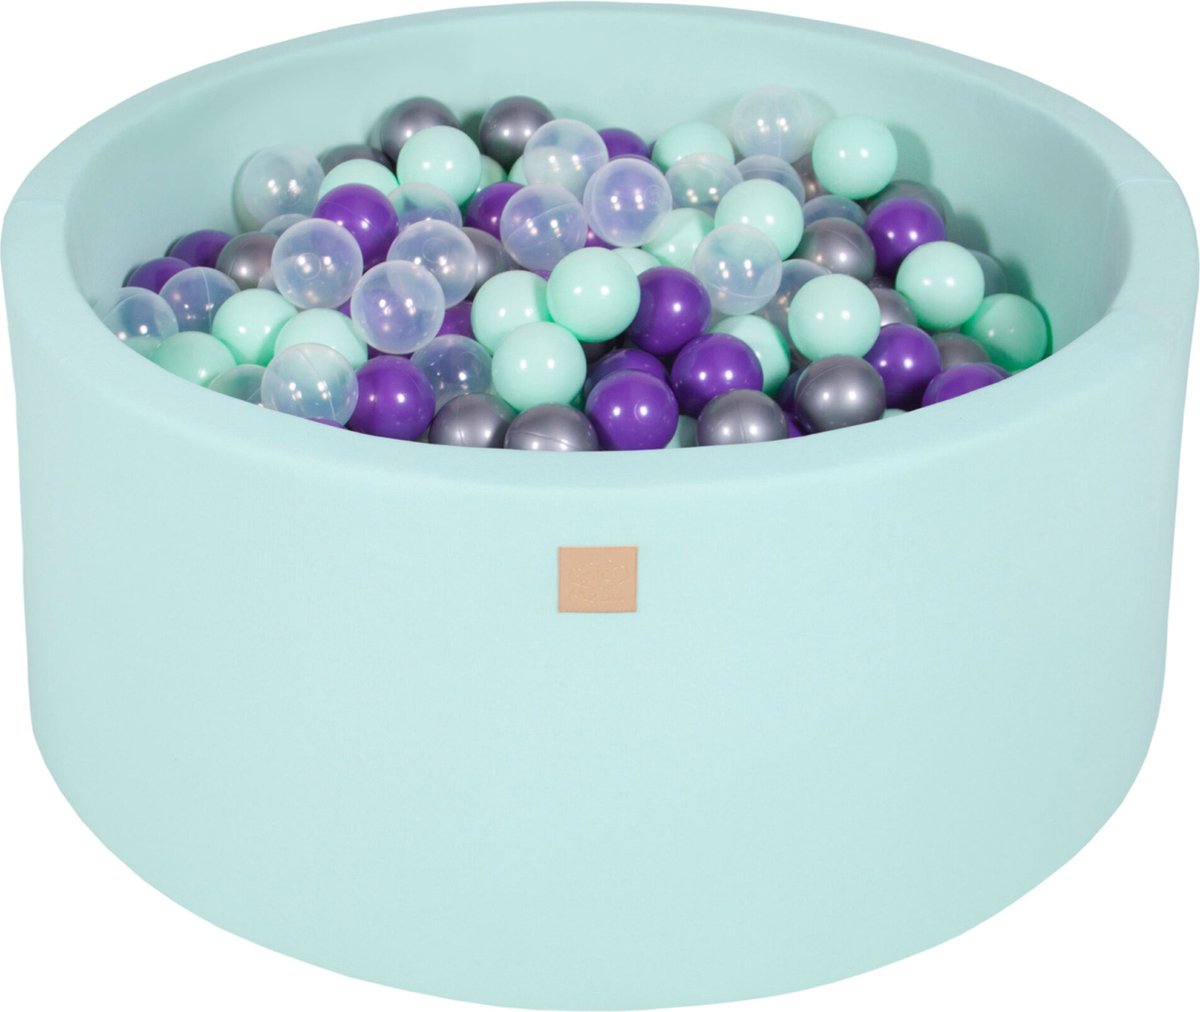 Ballenbak KATOEN Mint - 90x40 incl. 300 bollen - Mint, Transparant, Zilver, Violet